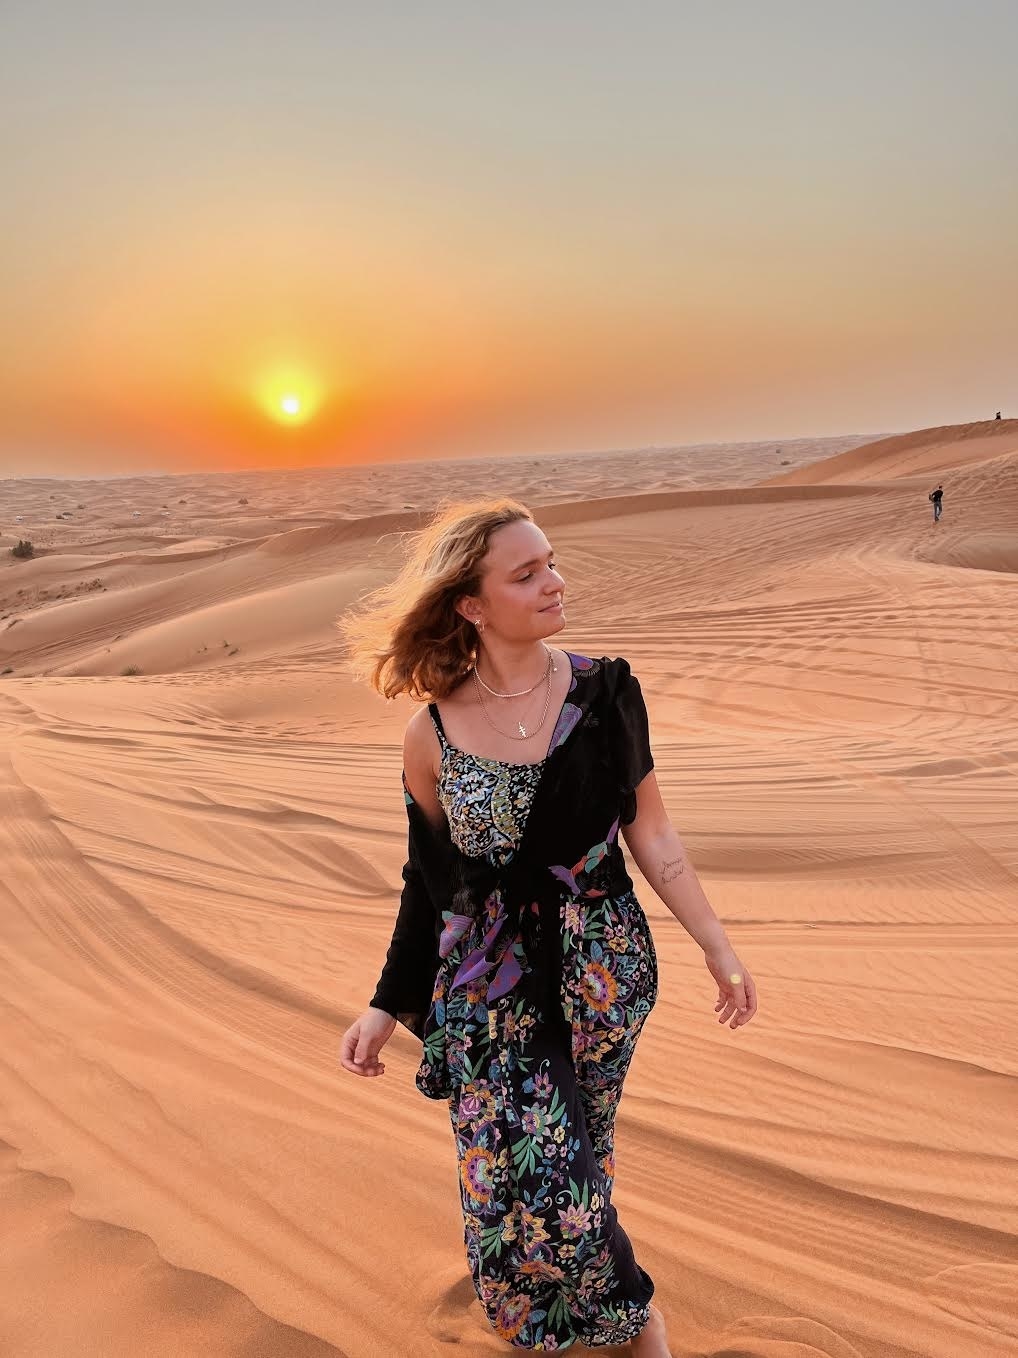 woman standing in the desert